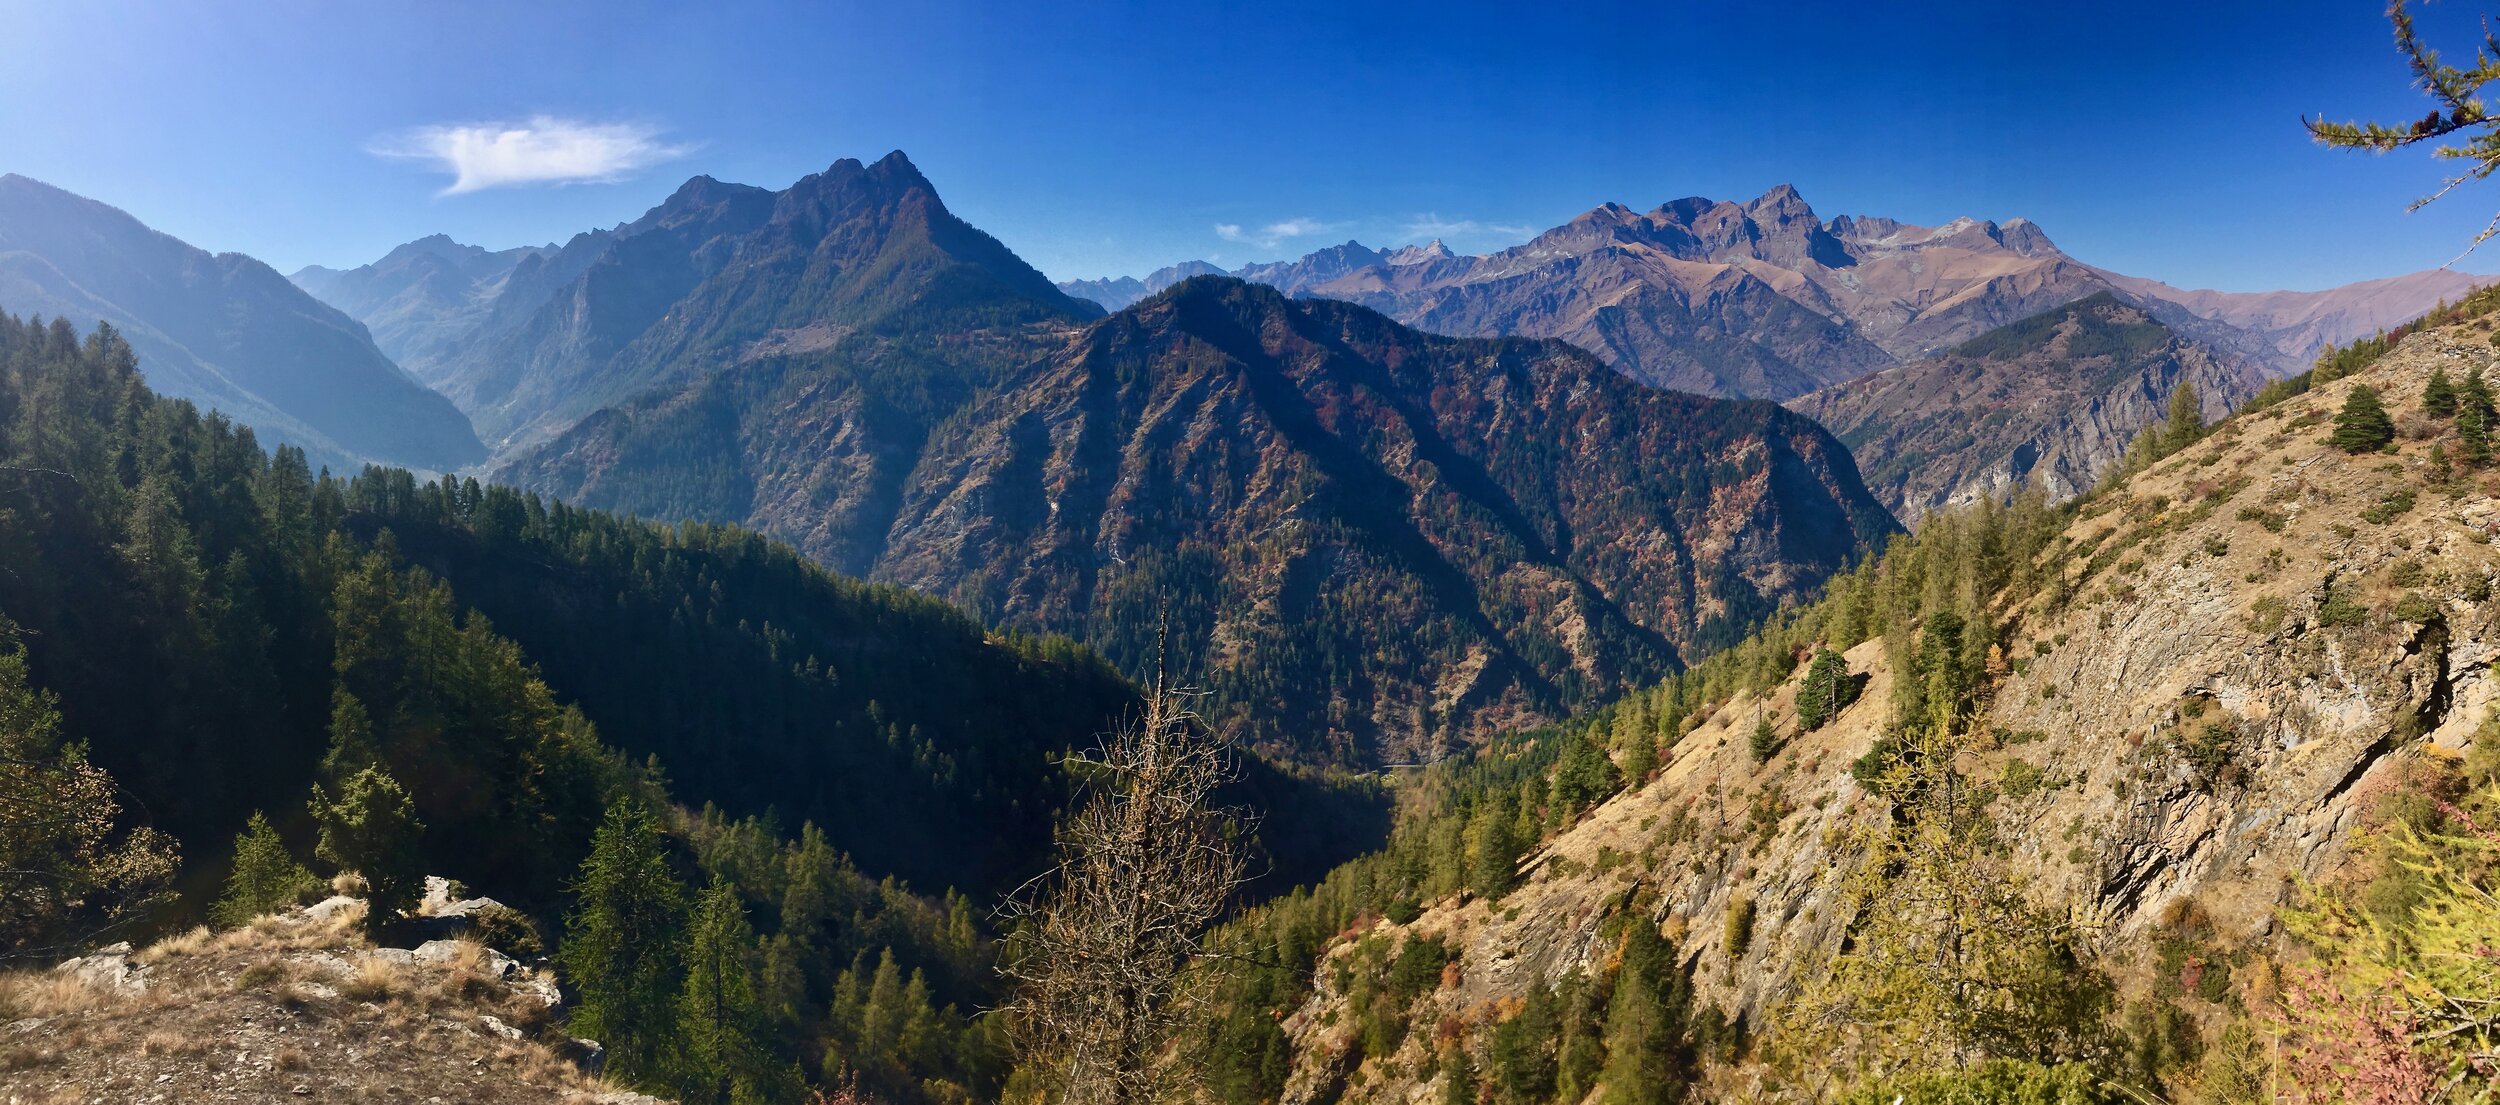 Hiking the Italian Alps in the Piedmont region